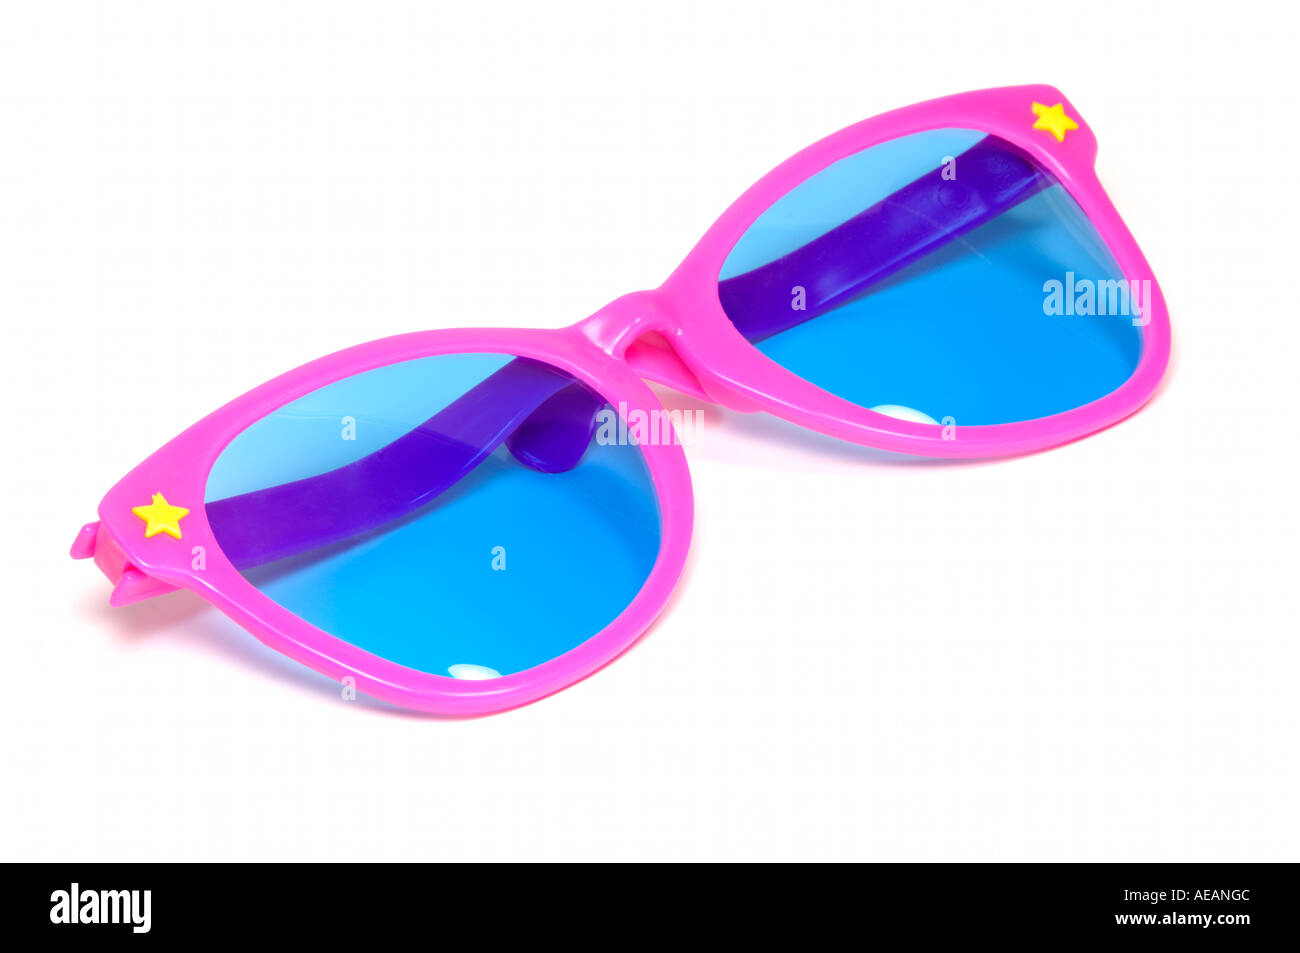 Large toy plastic sunglasses Stock Photo - Alamy